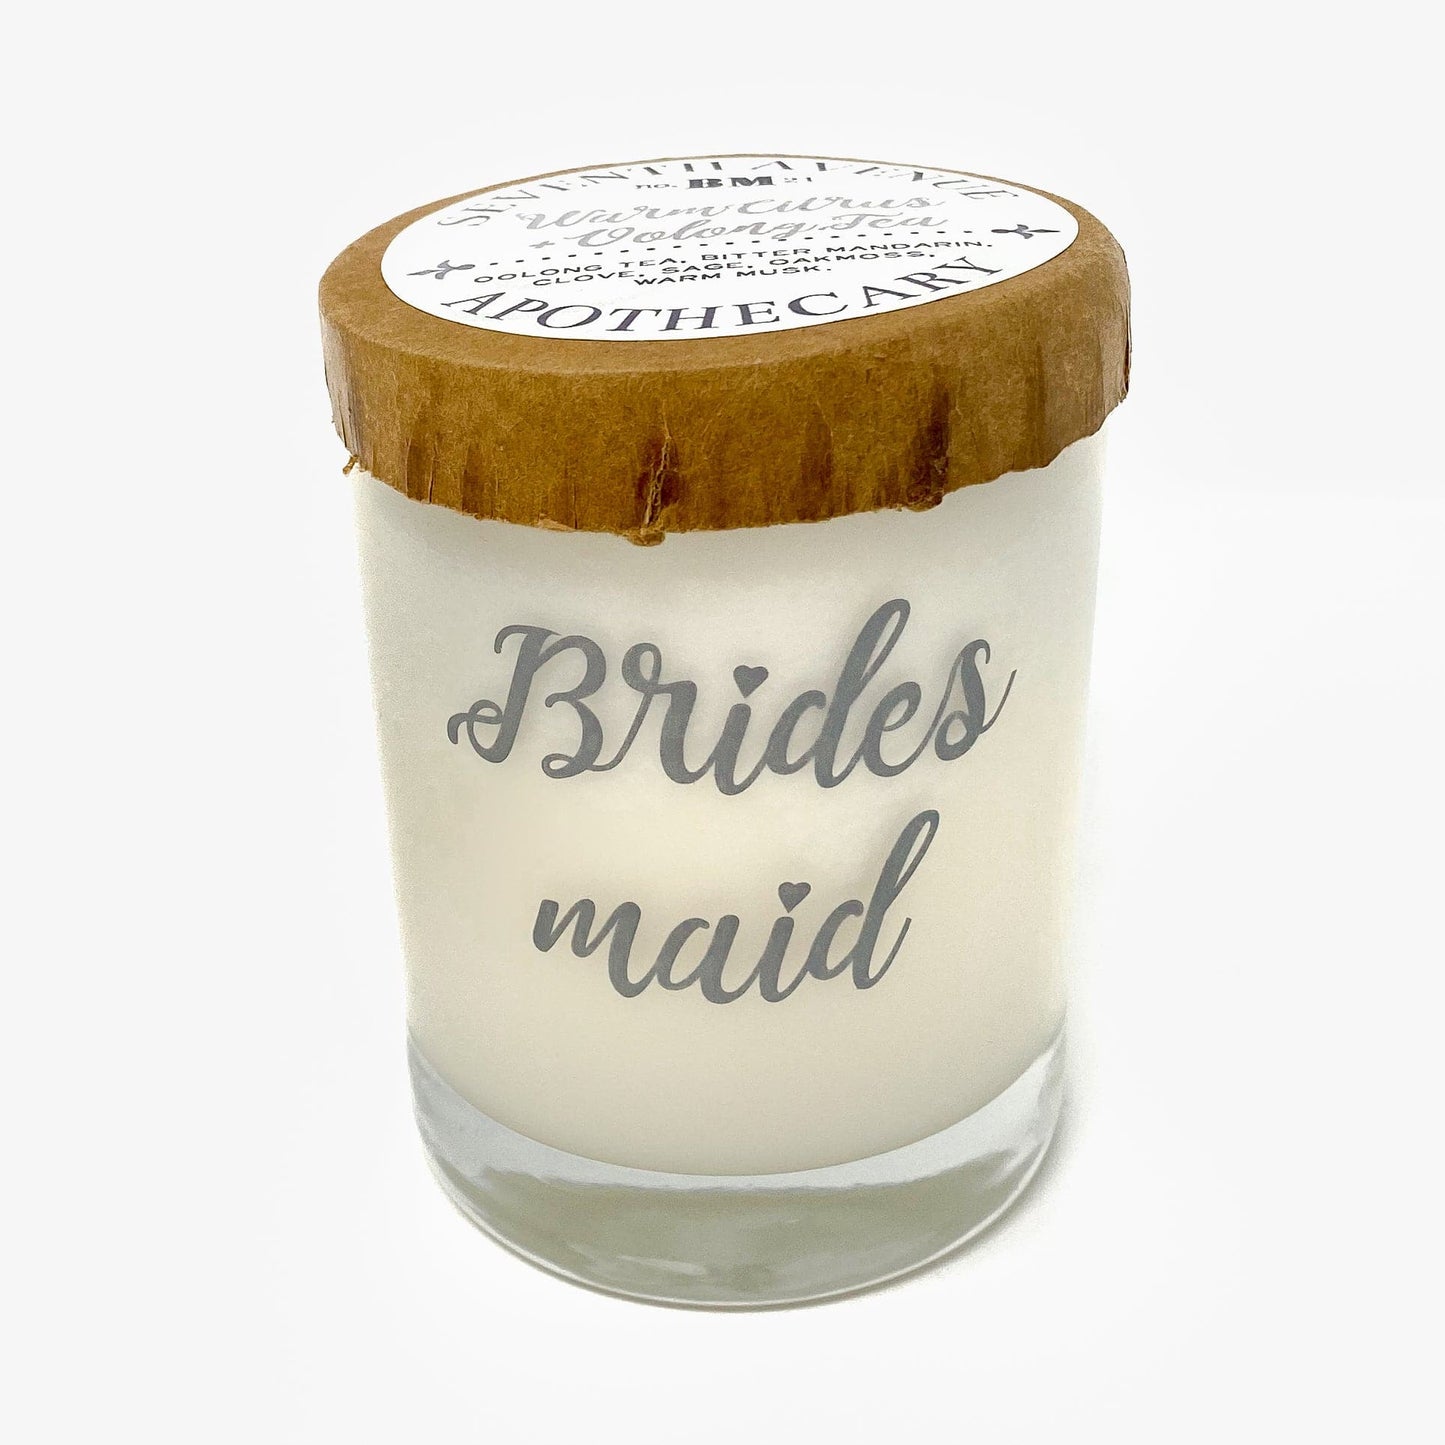 Bridesmaid - Warm Citrus + Oolong Tea